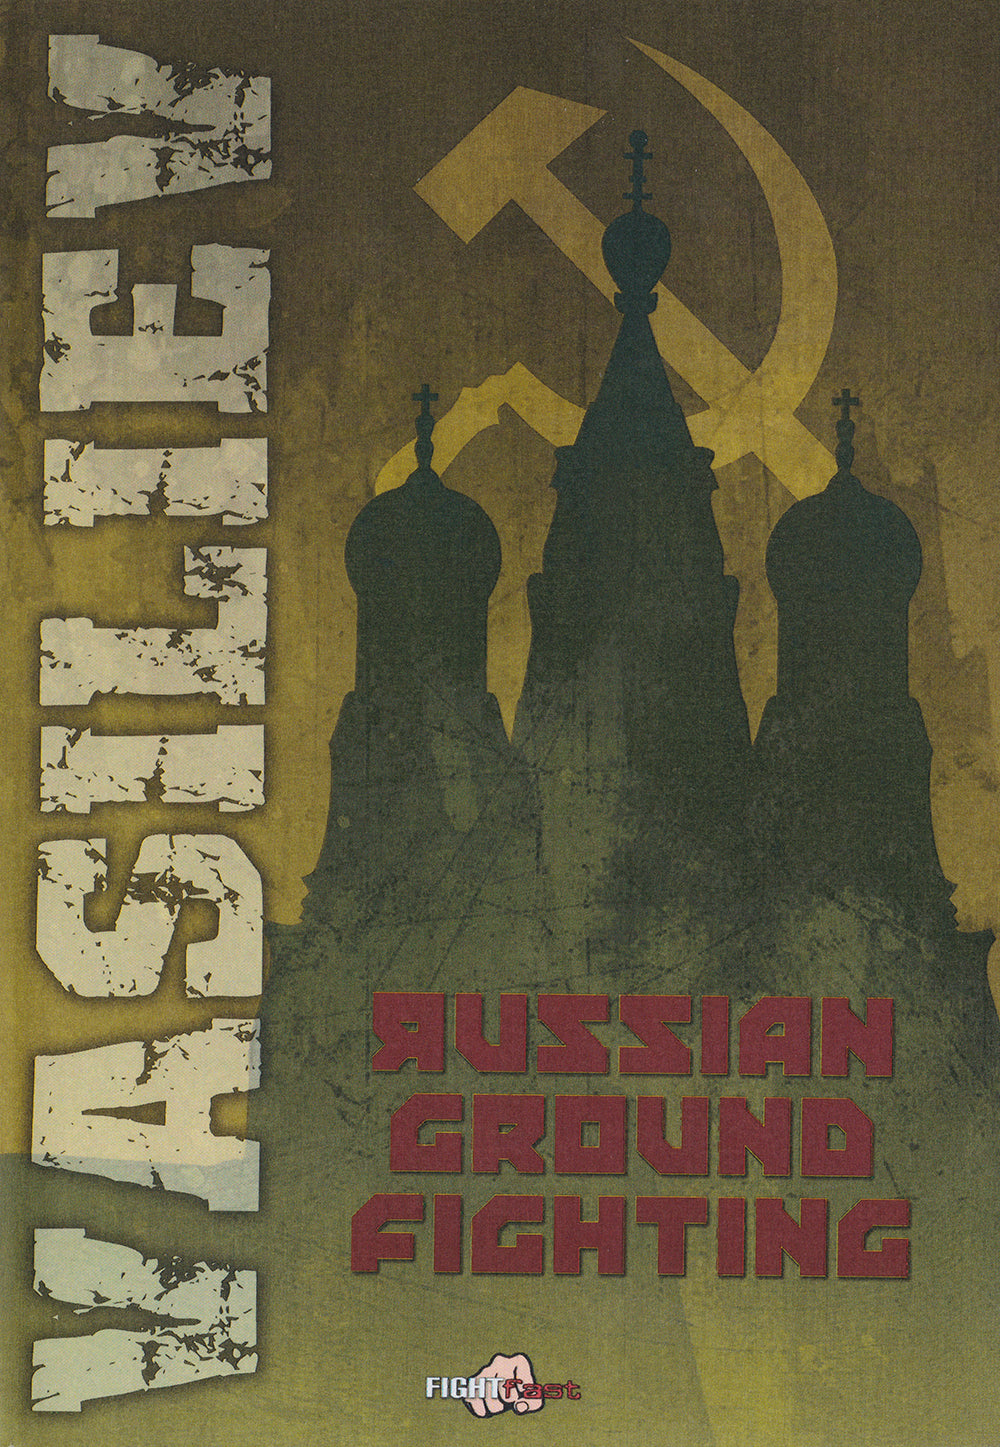 Systema: Russian Groundfighting 2 DVD Set with Vladimir Vasiliev - Budovideos Inc